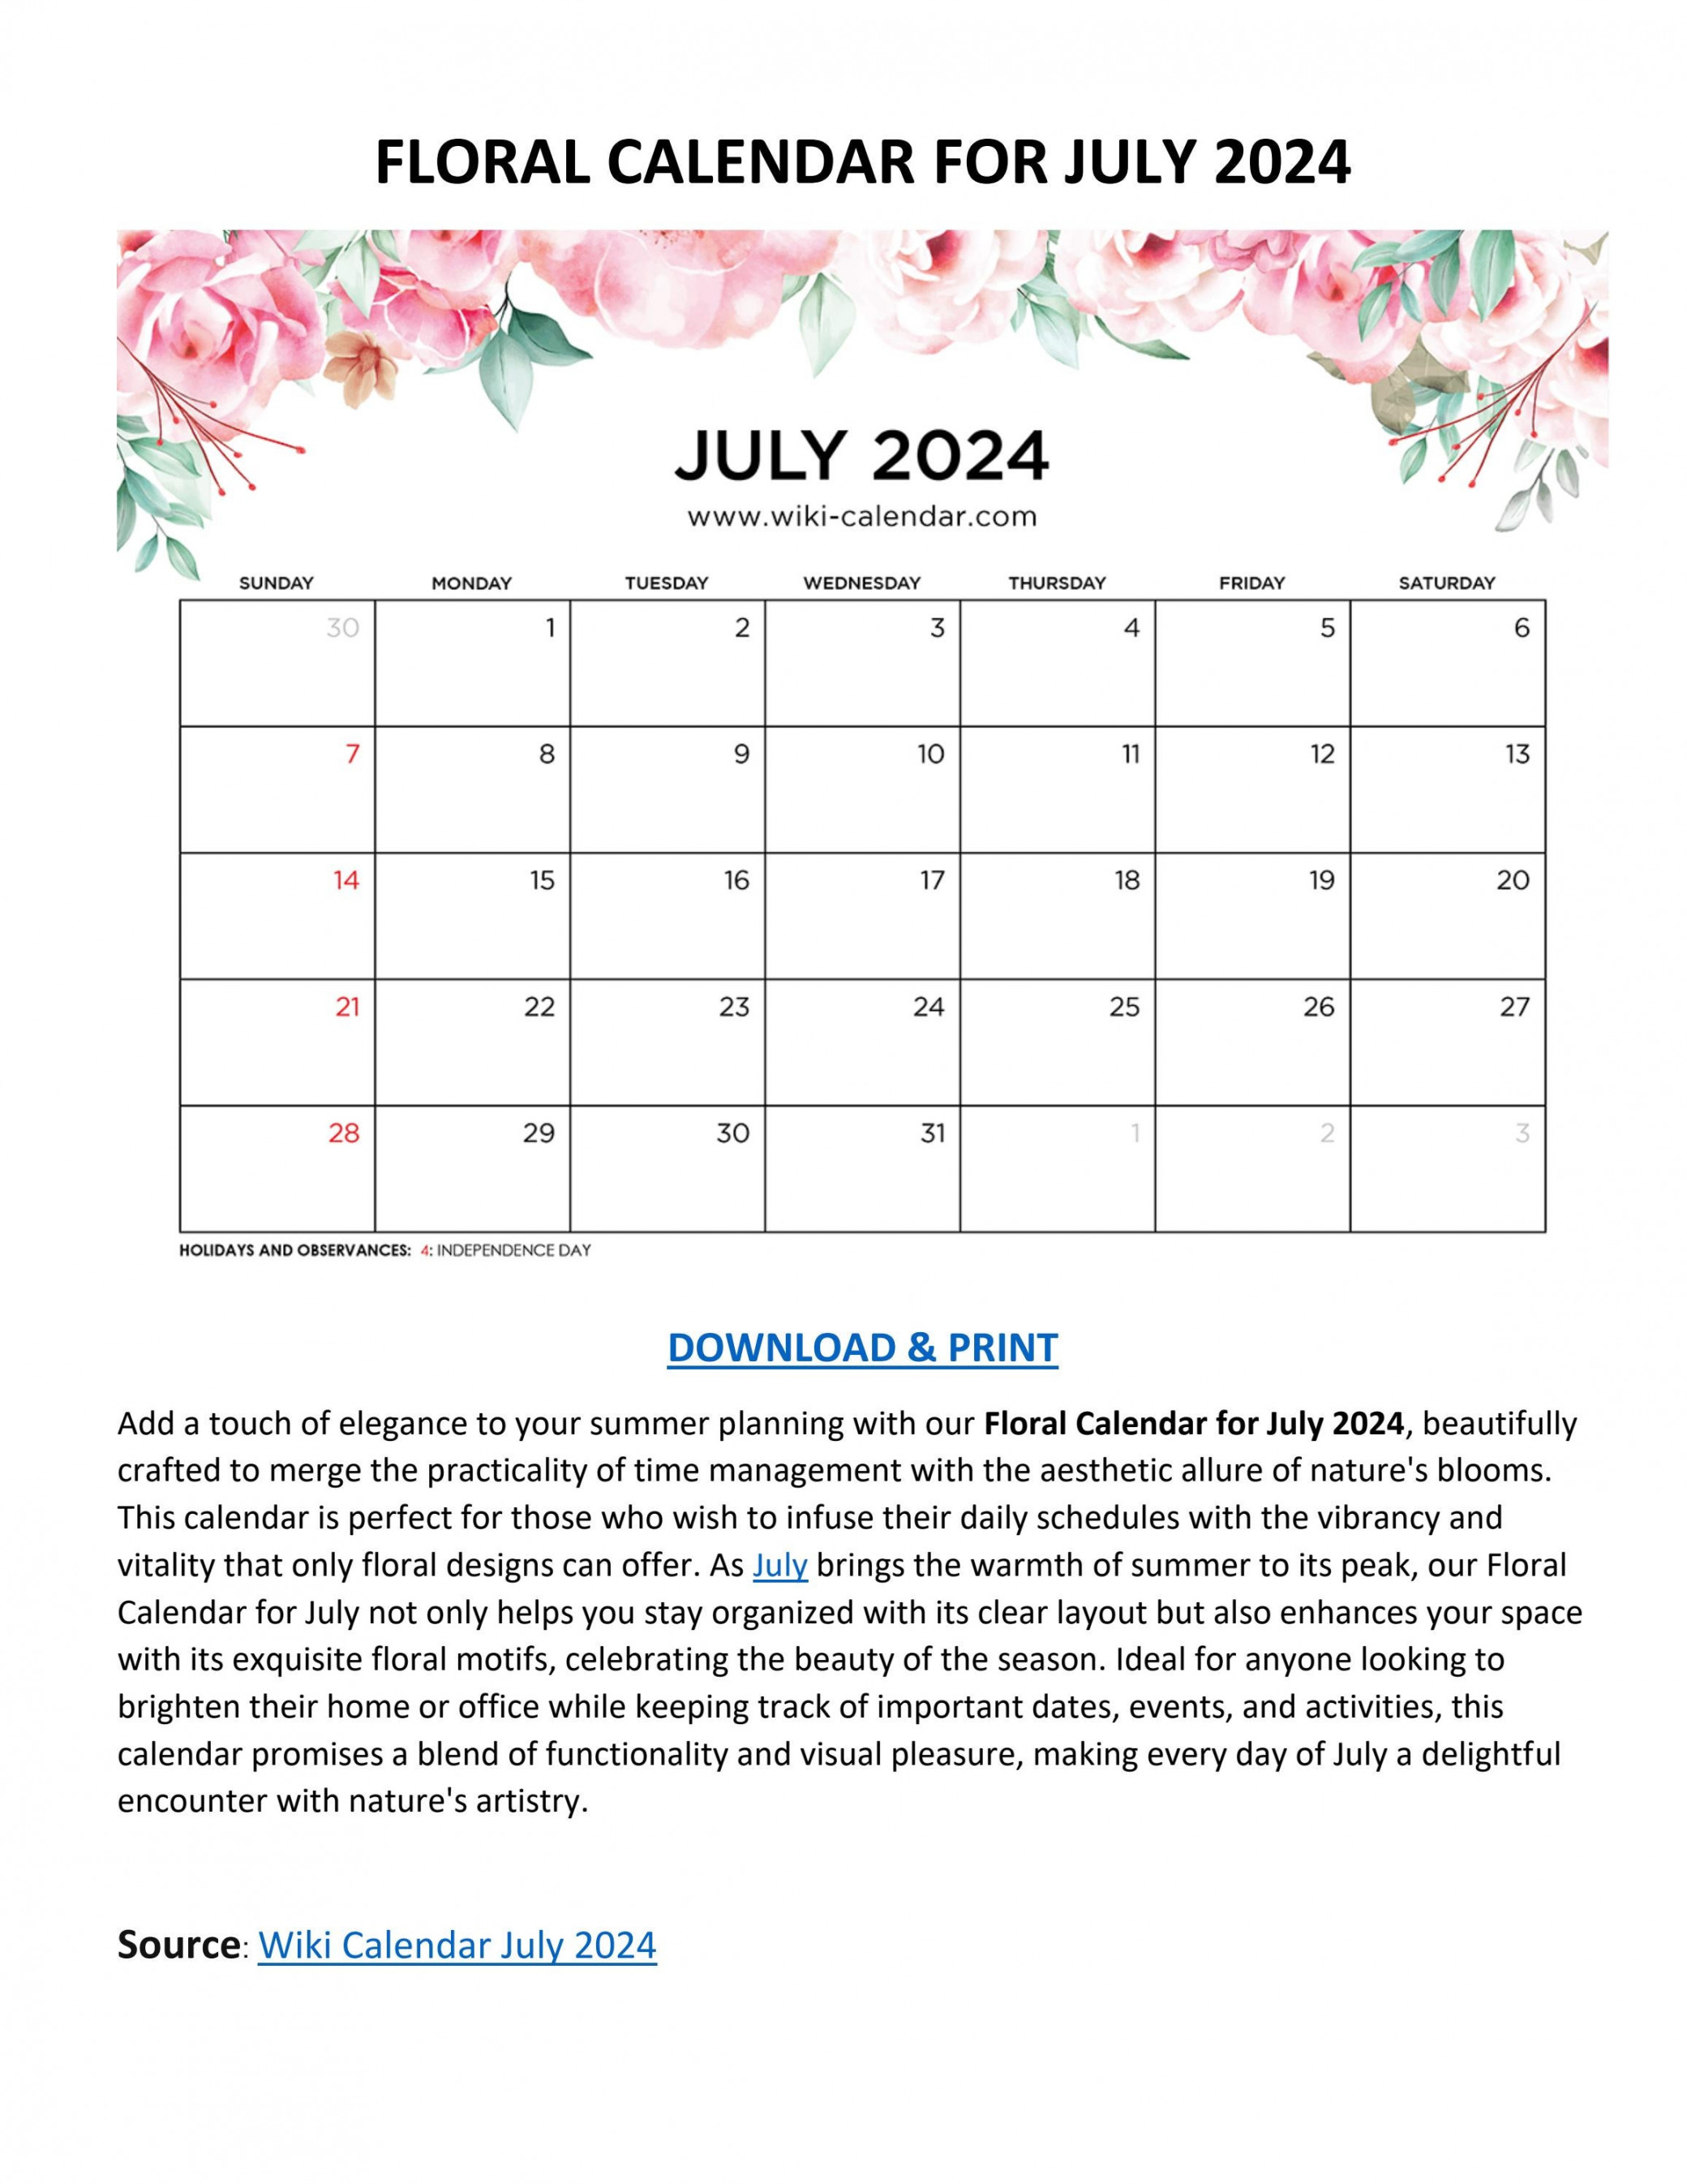 Floral Calendar for July  - Wiki Calendar by Wiki Calendar - Issuu